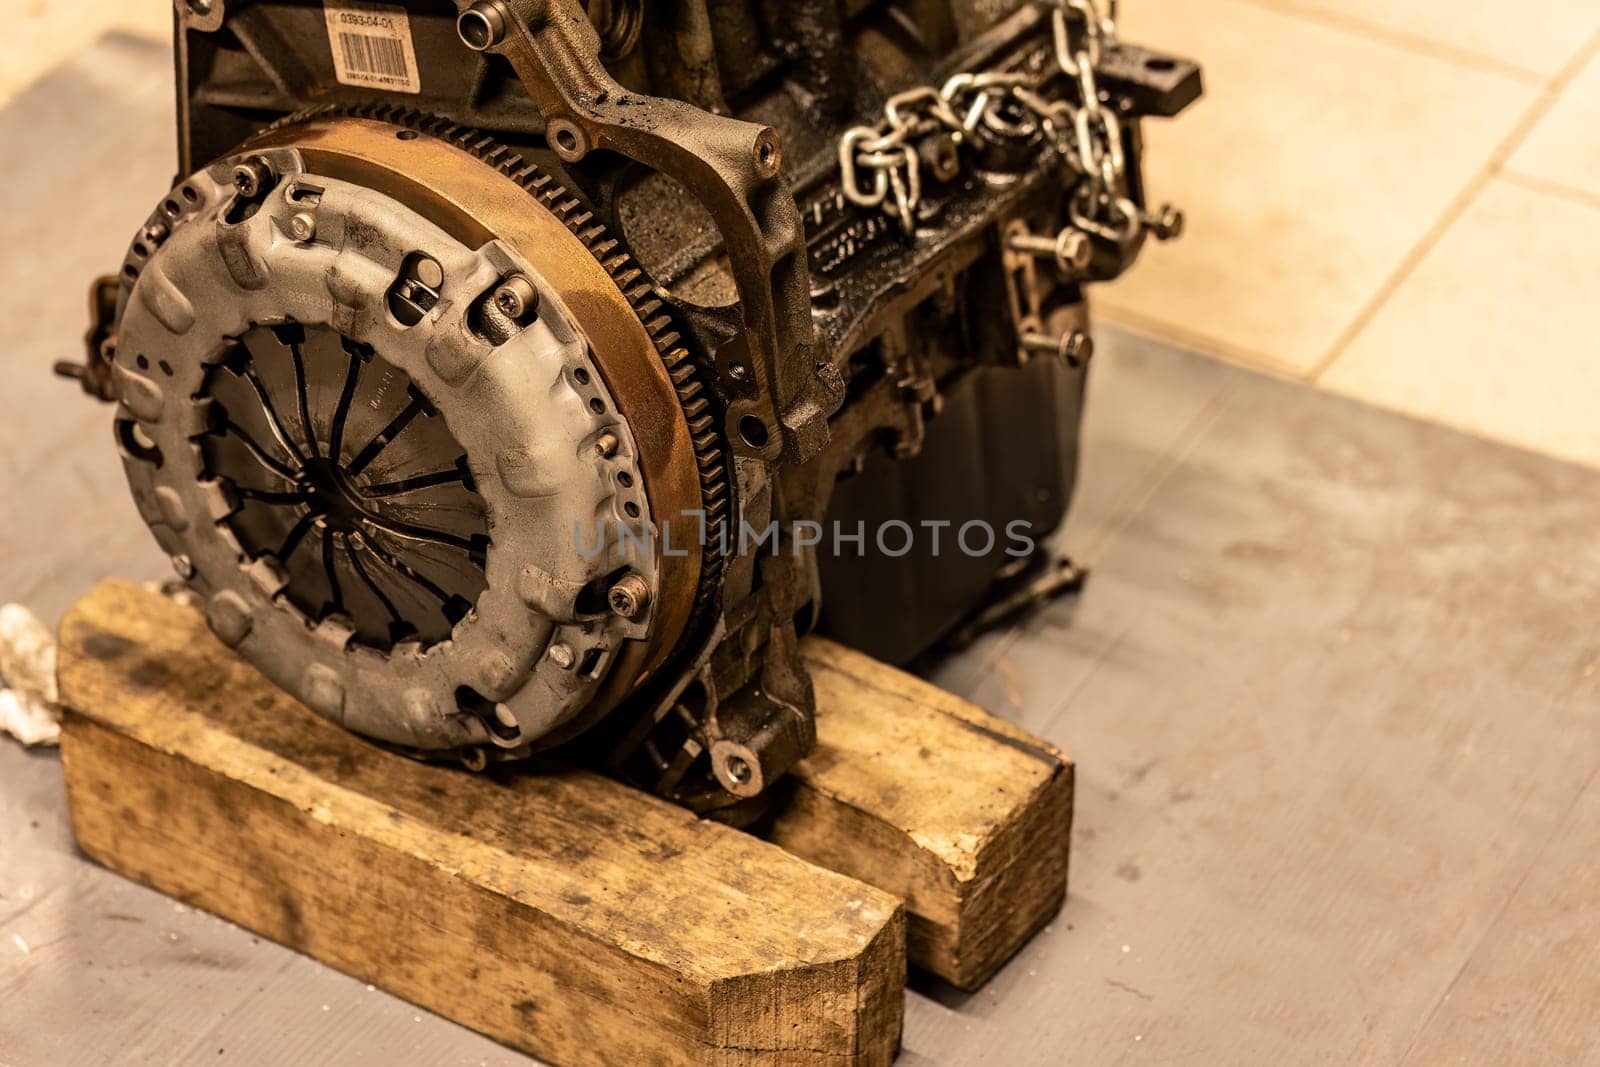 Detailed photo of a dismantled car engine's clutch, showcasing the complex mechanics of automotive design.